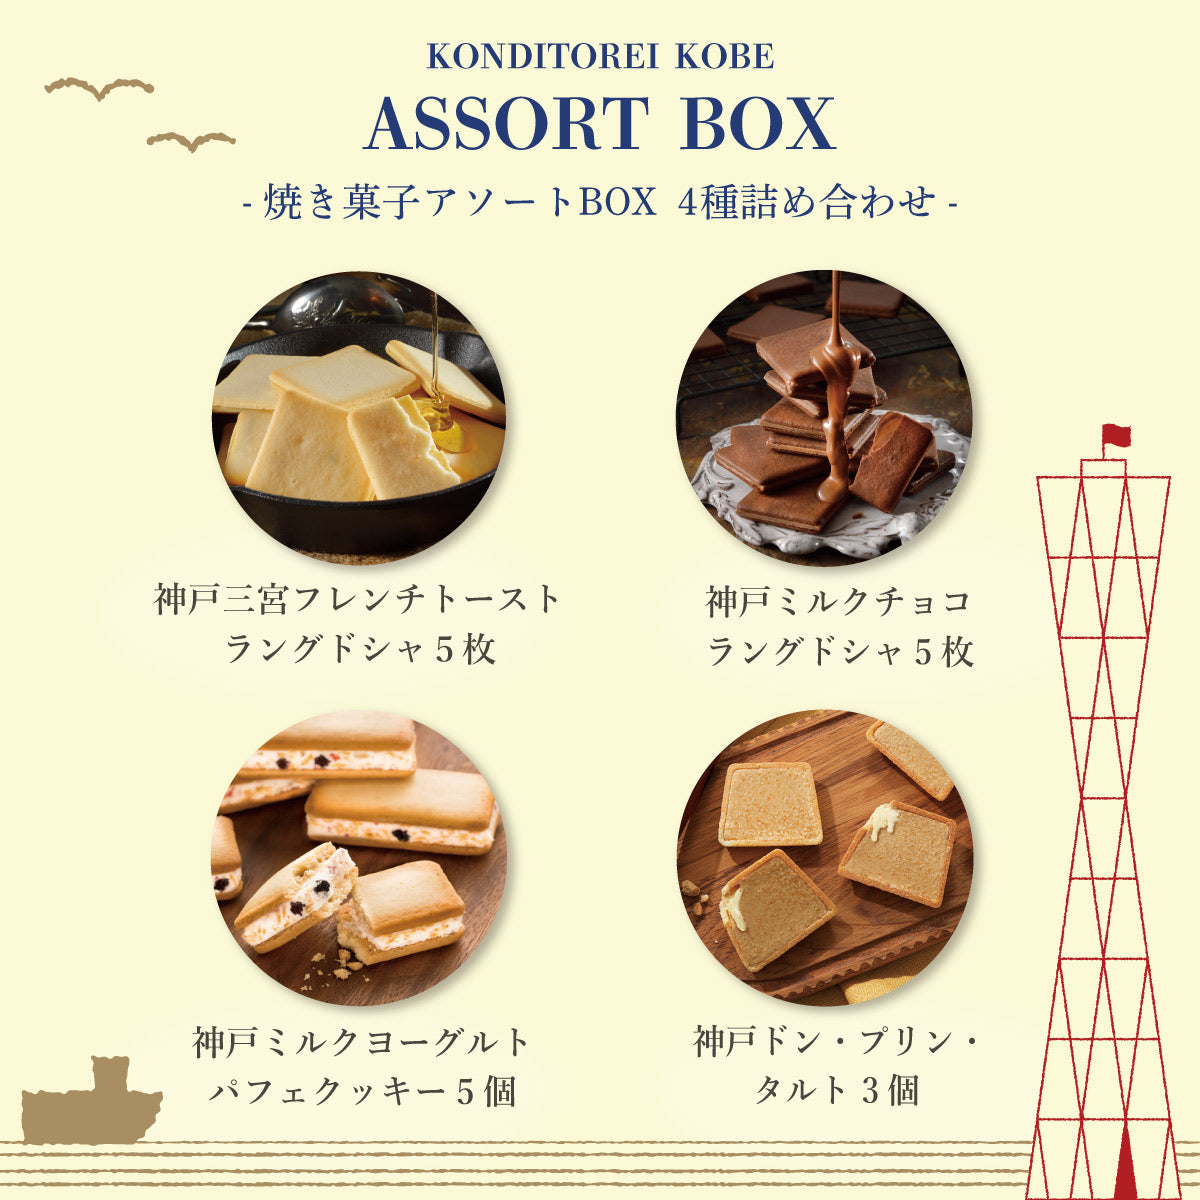 japanese dessert assortment, japanese dessert box, japanese snack box, konditorei kobe, japanese sweets box, konditorei kobe baked sweets box